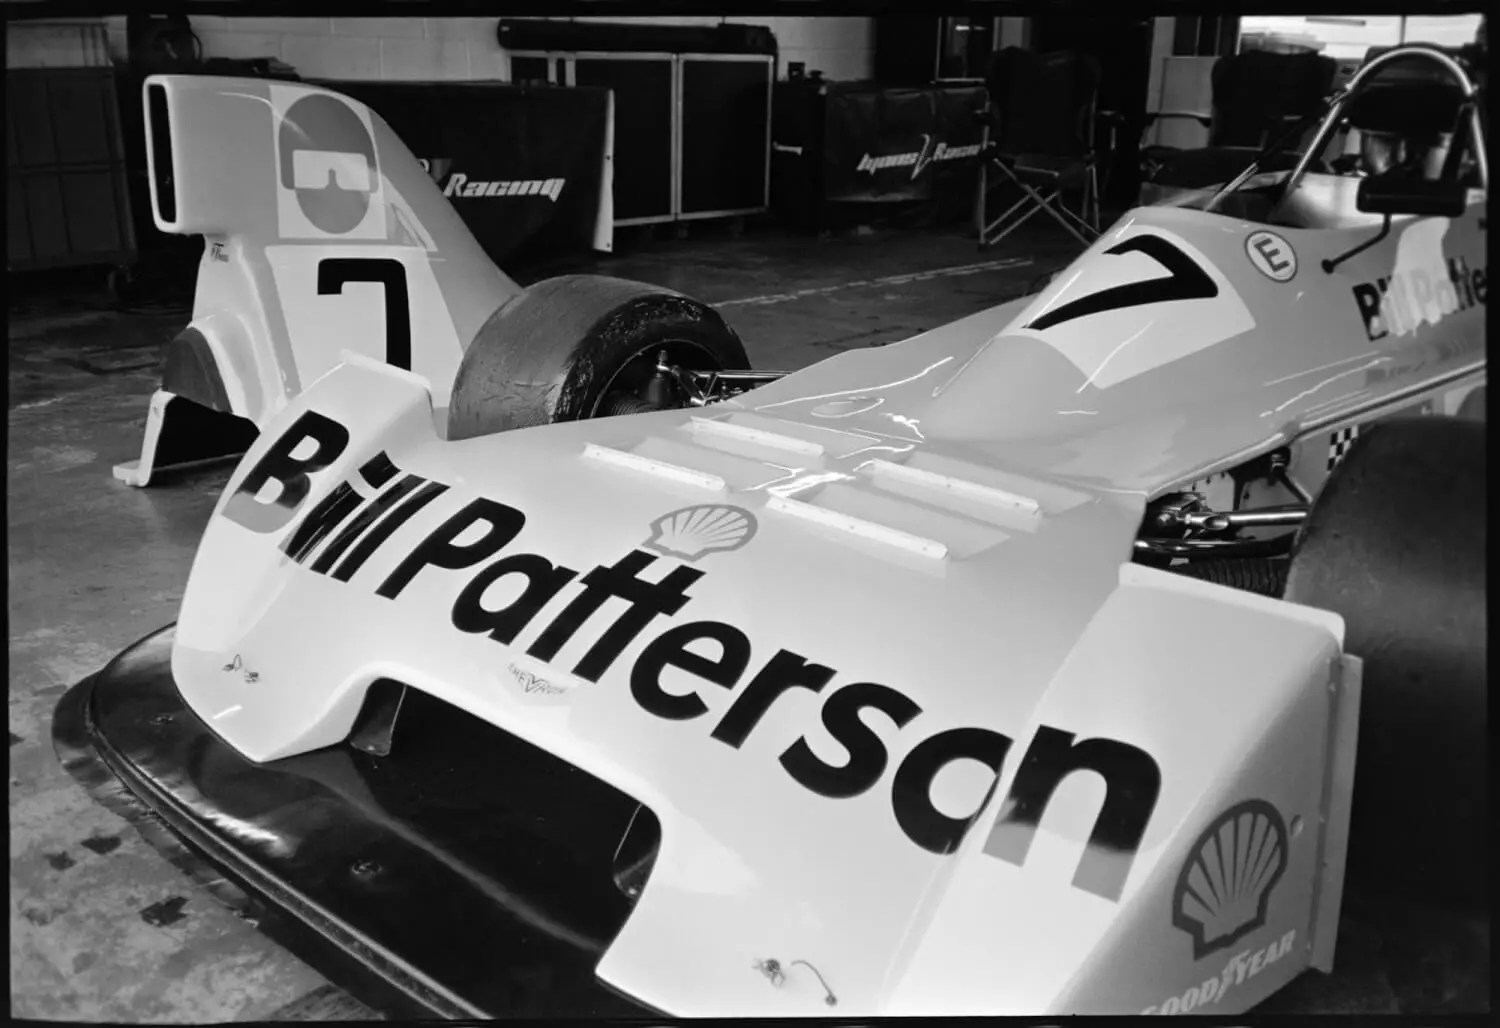 5 Frames… In the pits at Brands Hatch motor racing circuit on FP4 PLUS (35mm format / EI 125 / Nikon L35AF) – by Nik Stanbridge